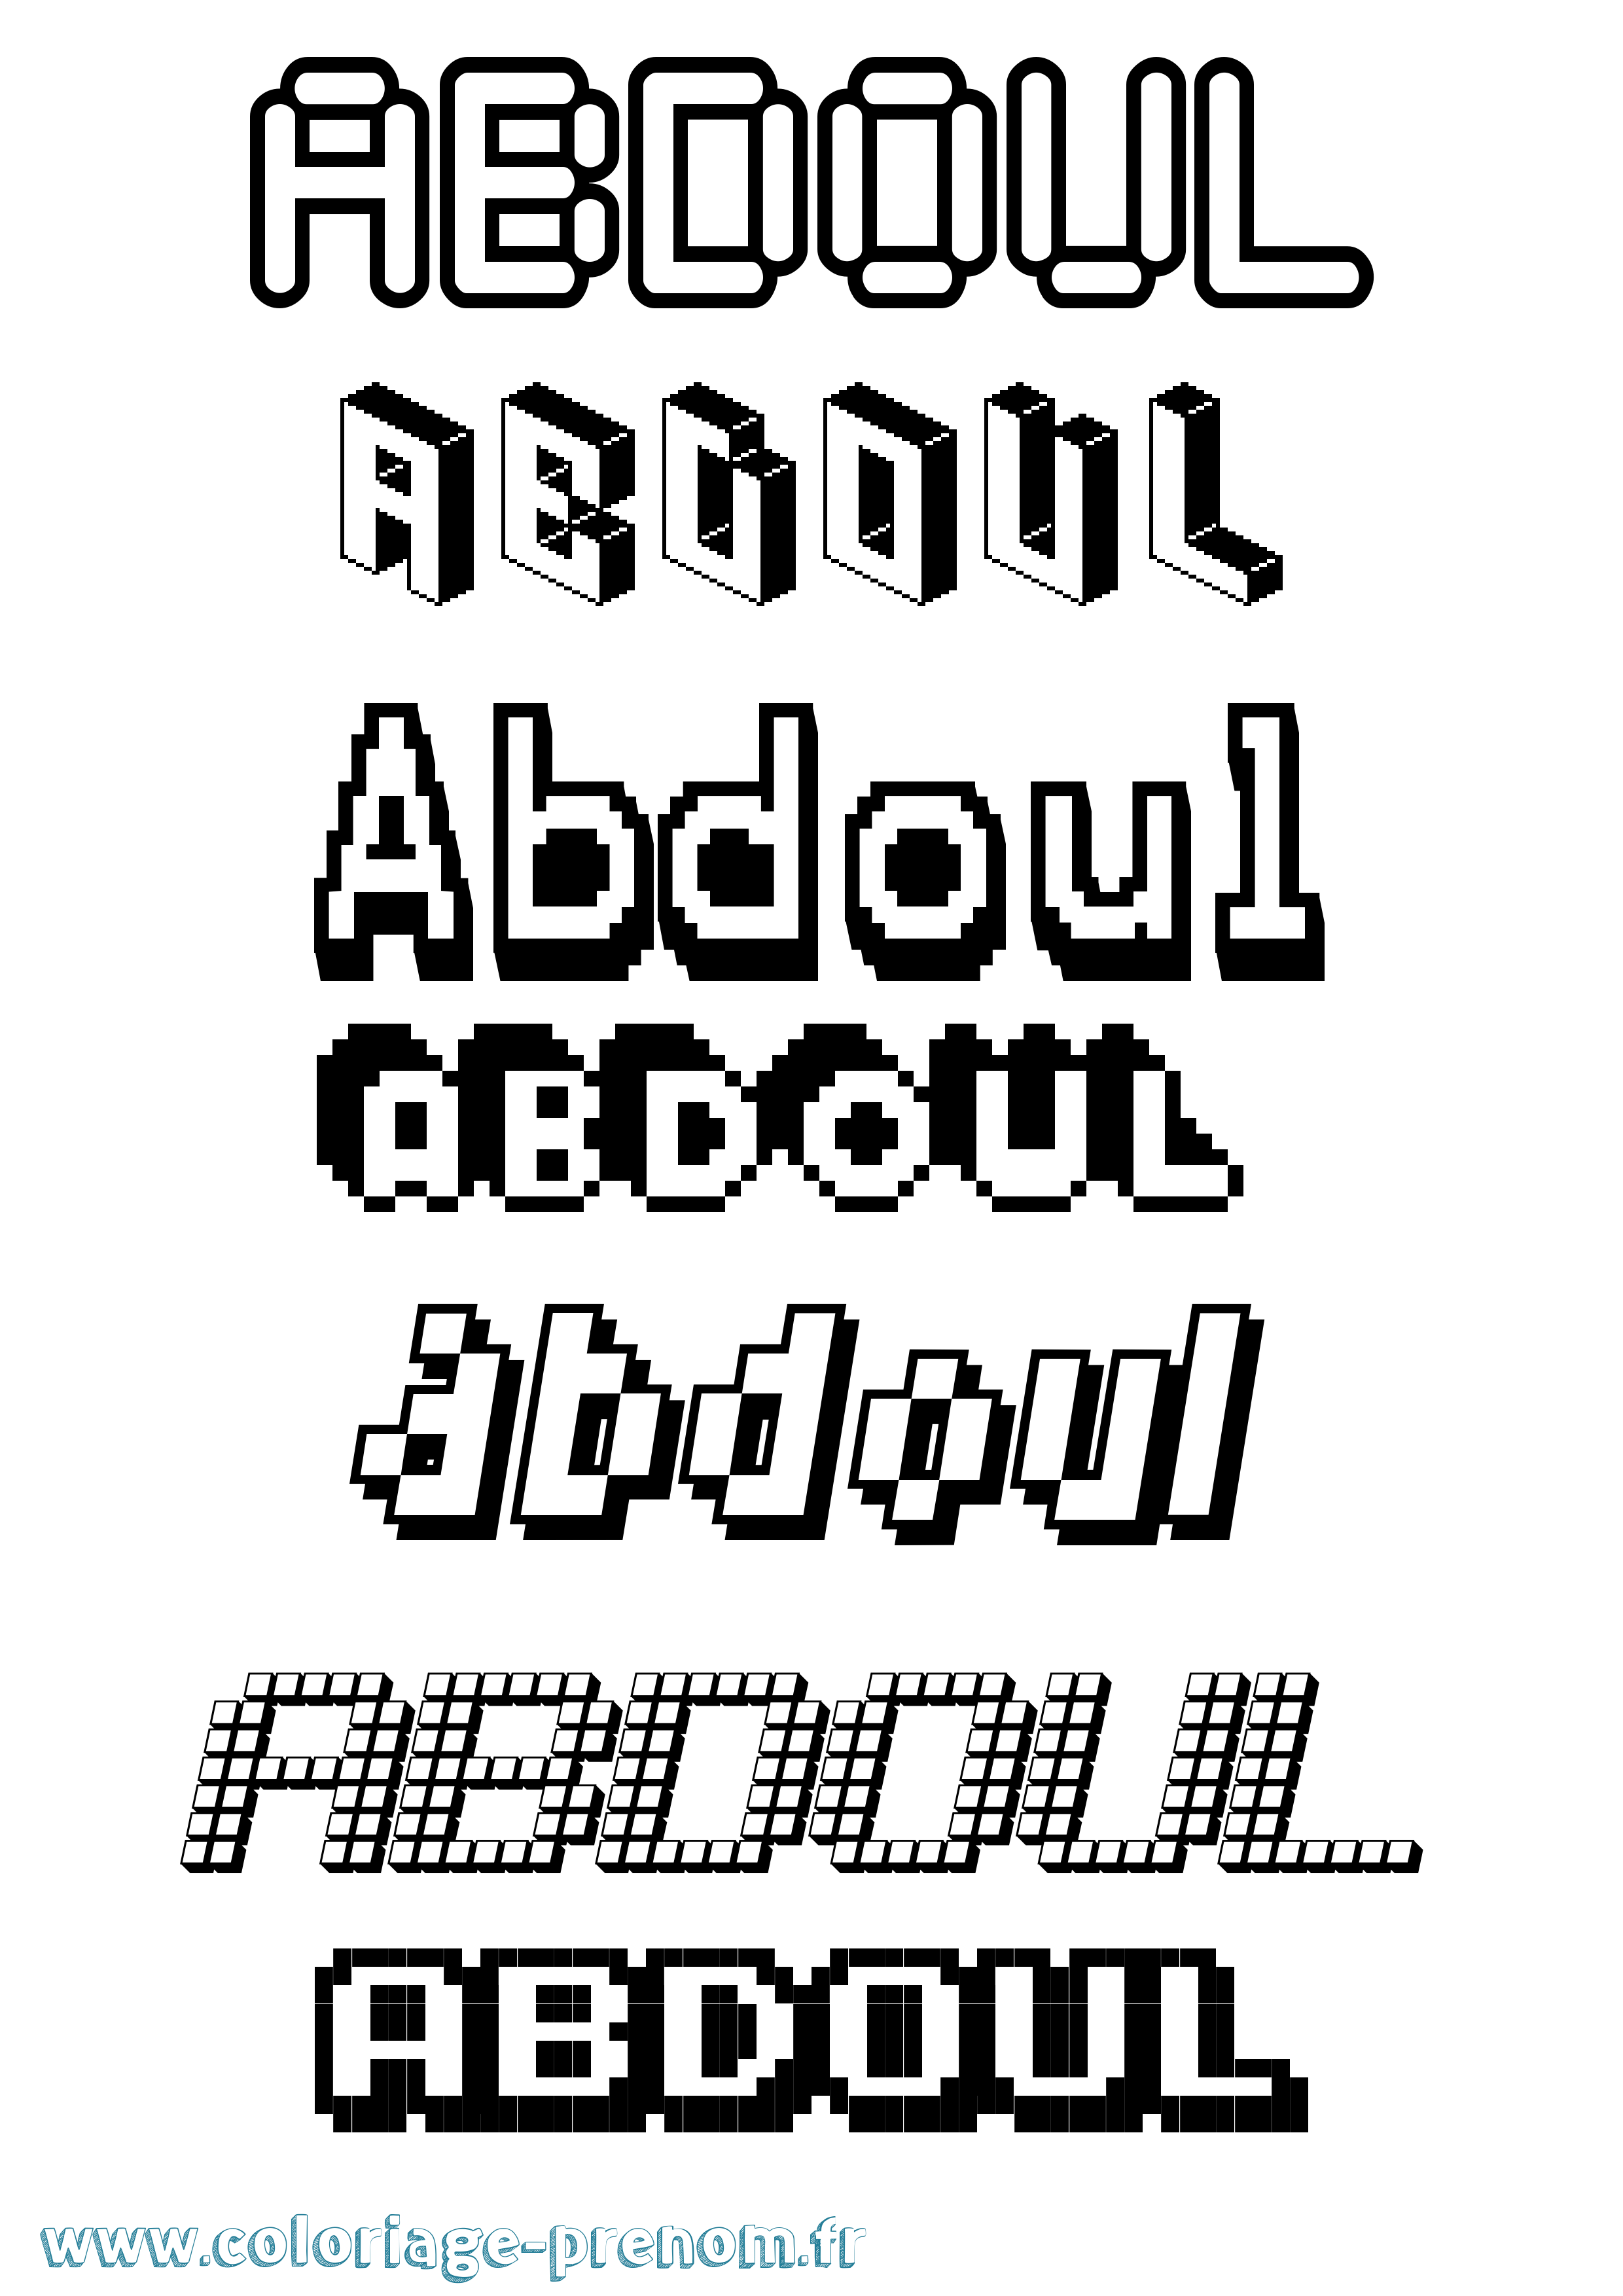 Coloriage prénom Abdoul Pixel